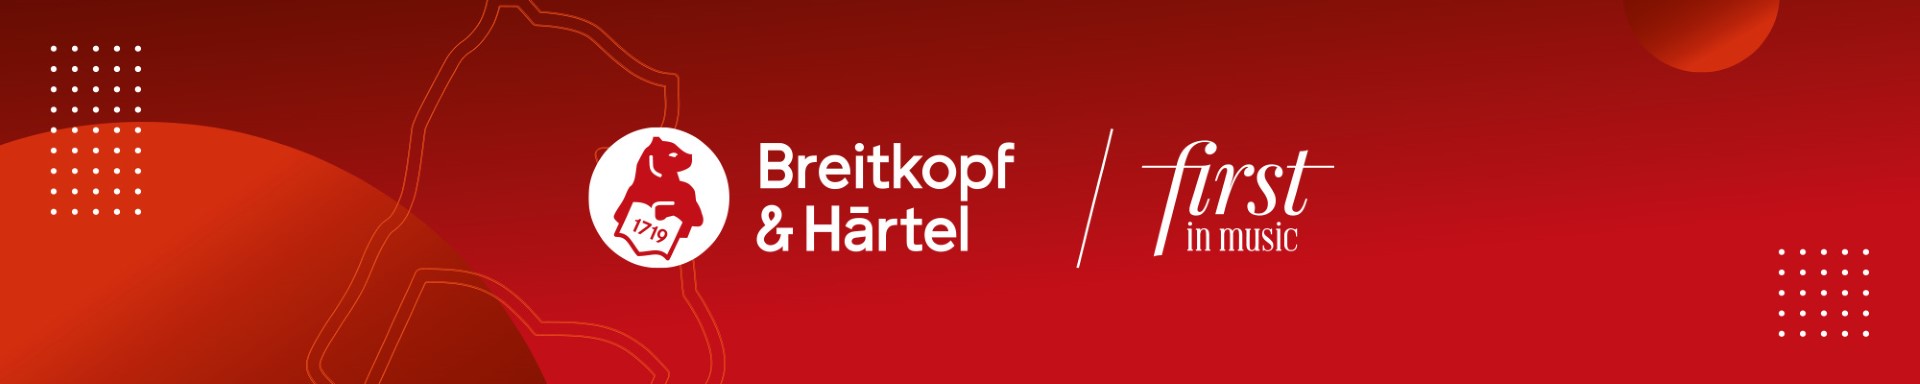 Breitkopf